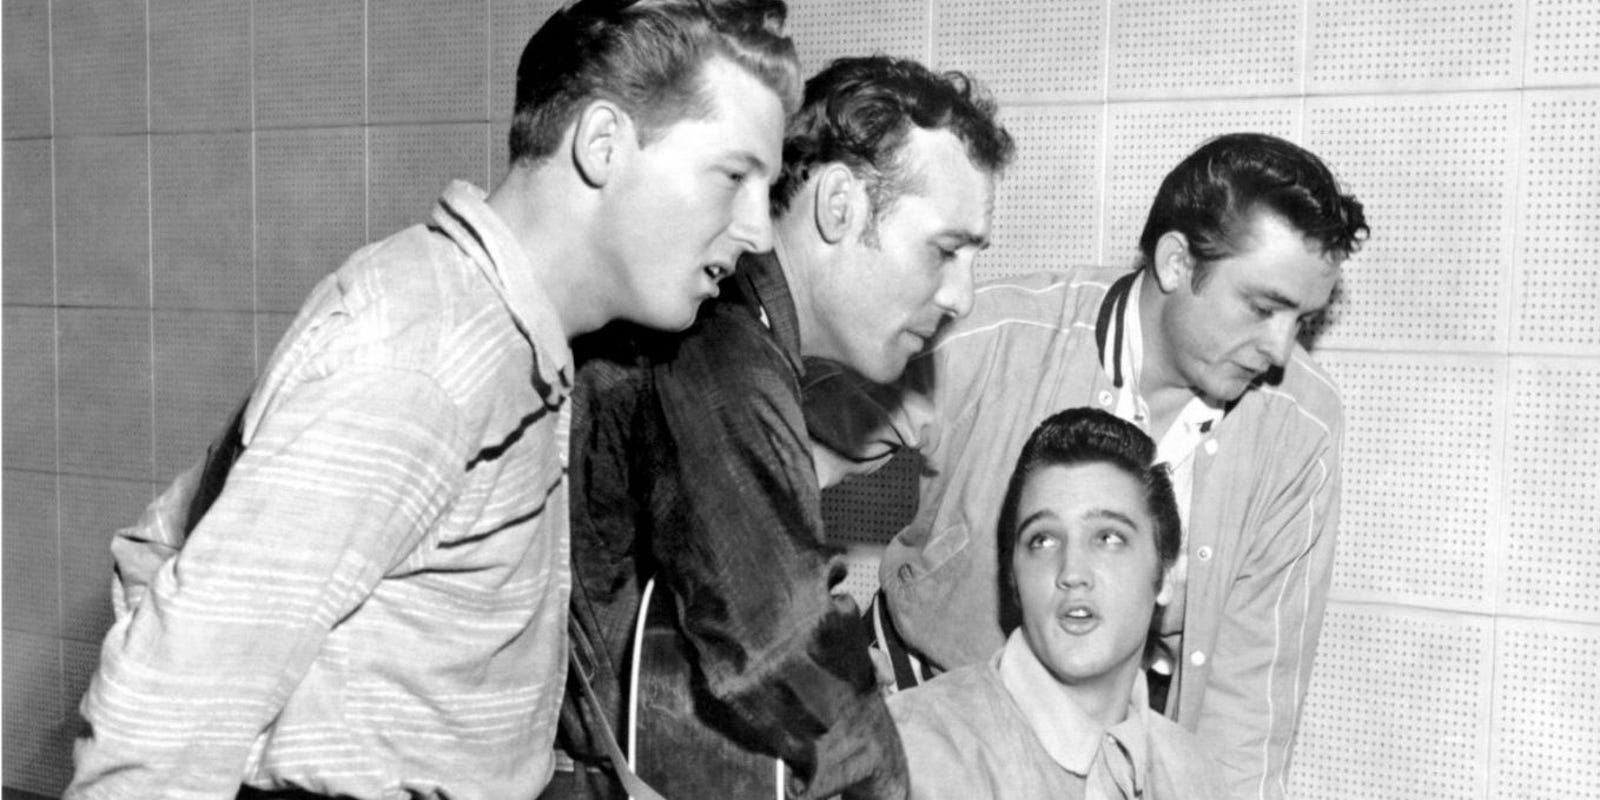 Elvis, Johnny Cash, and others singing together